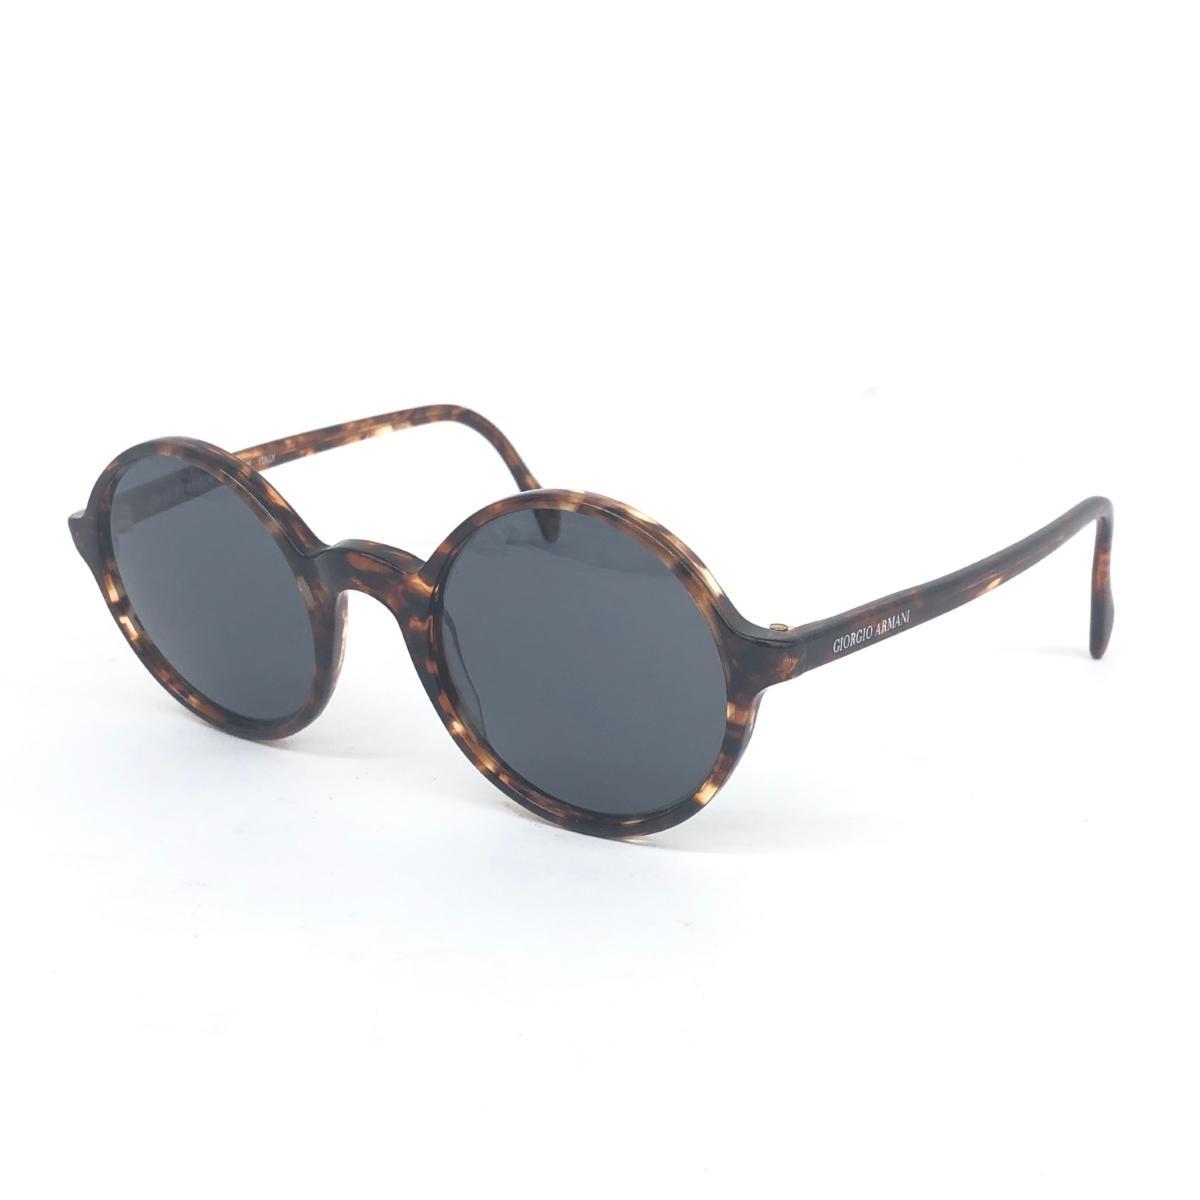 ◆GIORGIO ARMANI ジョルジオアルマーニ サングラス◆304 013 ブラウン ラウンド型 ユニセックス イタリア製 メガネ sunglasses 服飾小物_画像1